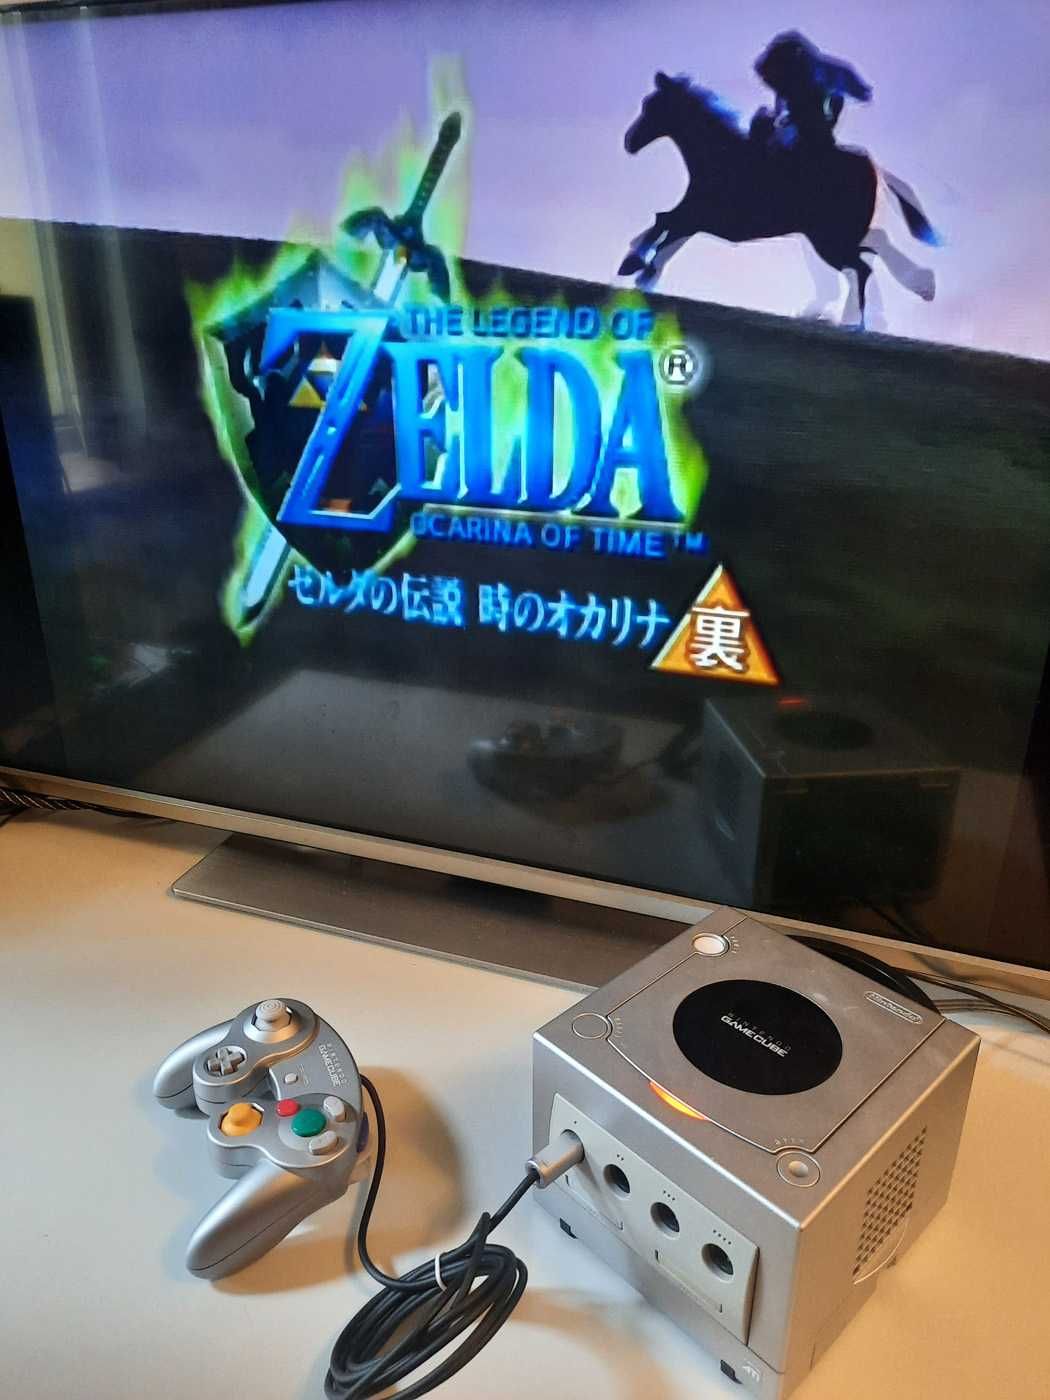 Zelda: Ocarina of Time / Master Quest (Ura) - GameCube [NTSC-J]